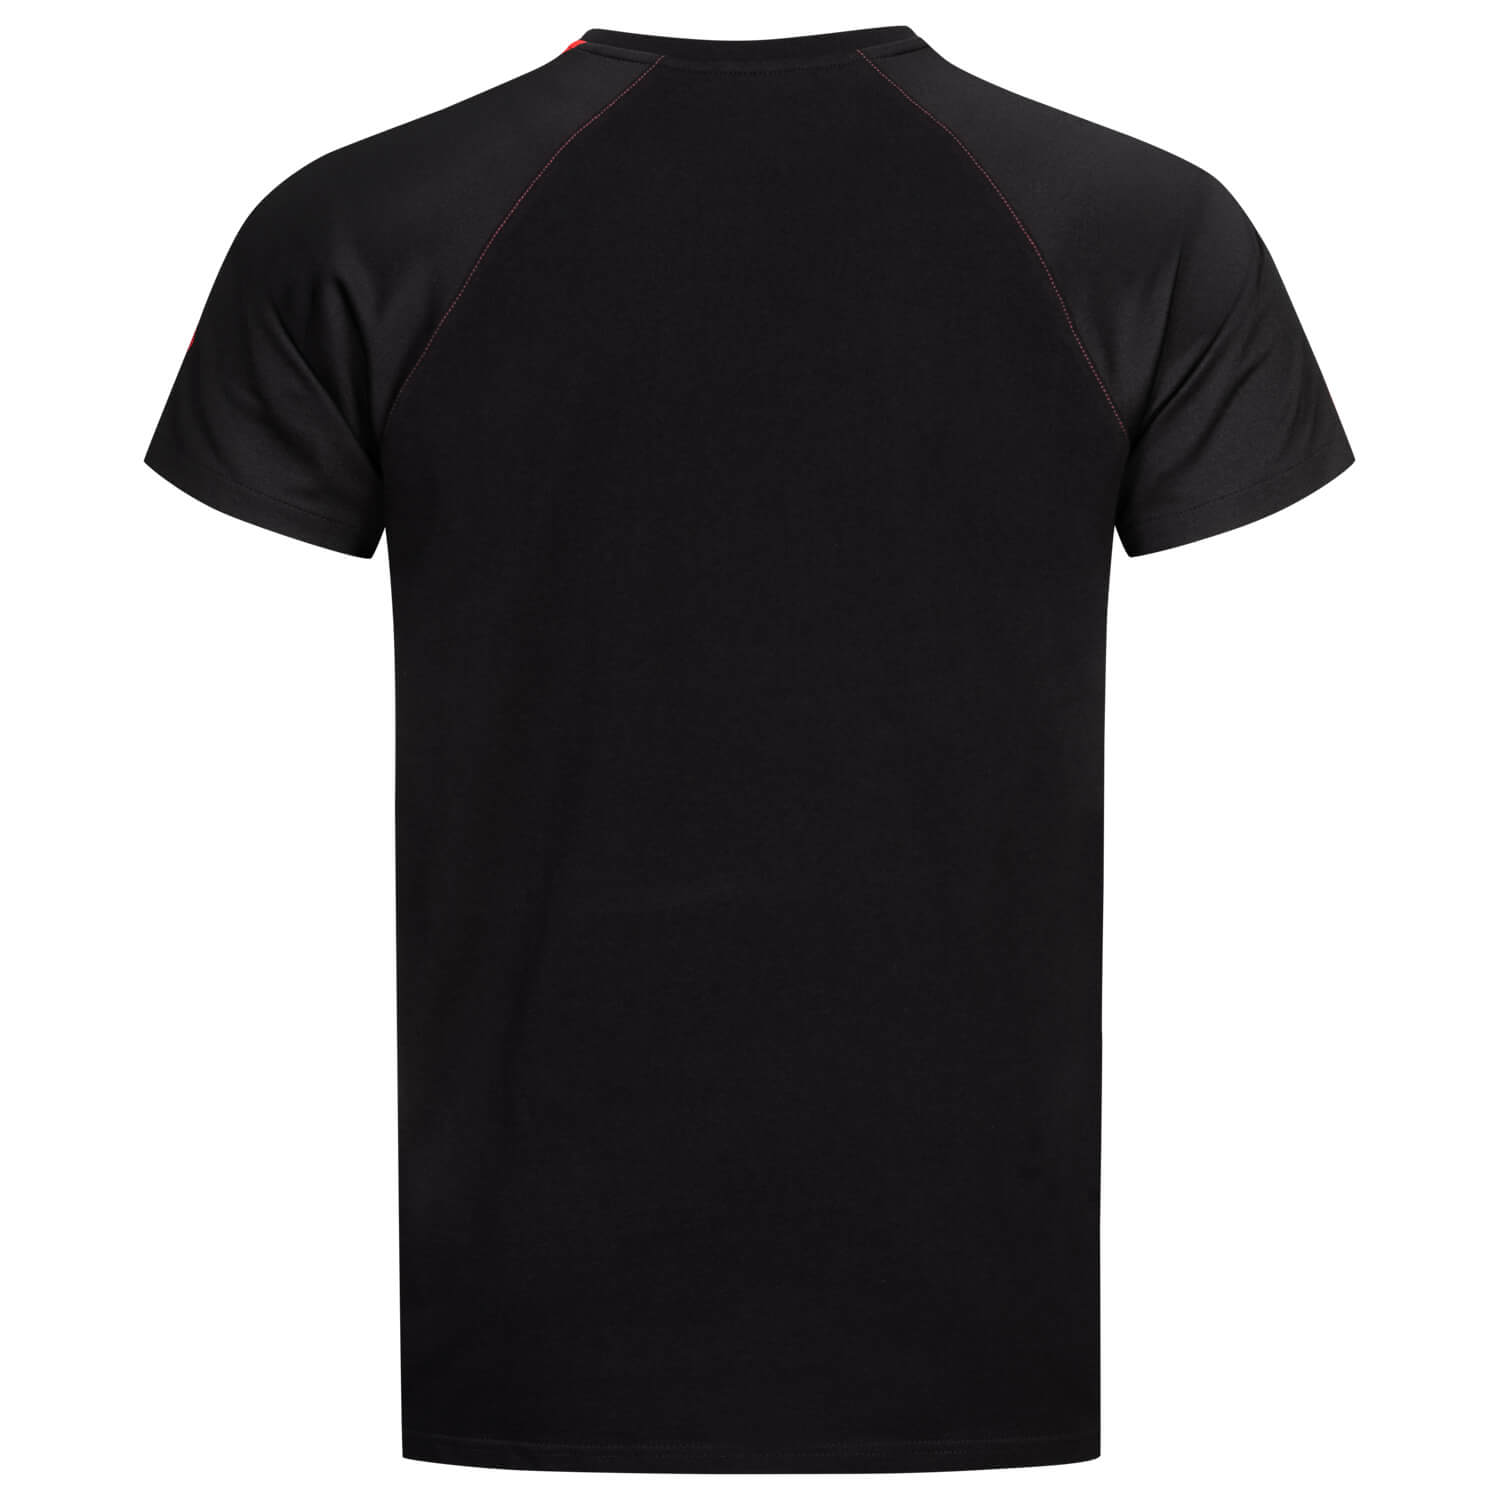 Bild 2: T-Shirt Upcycling Black